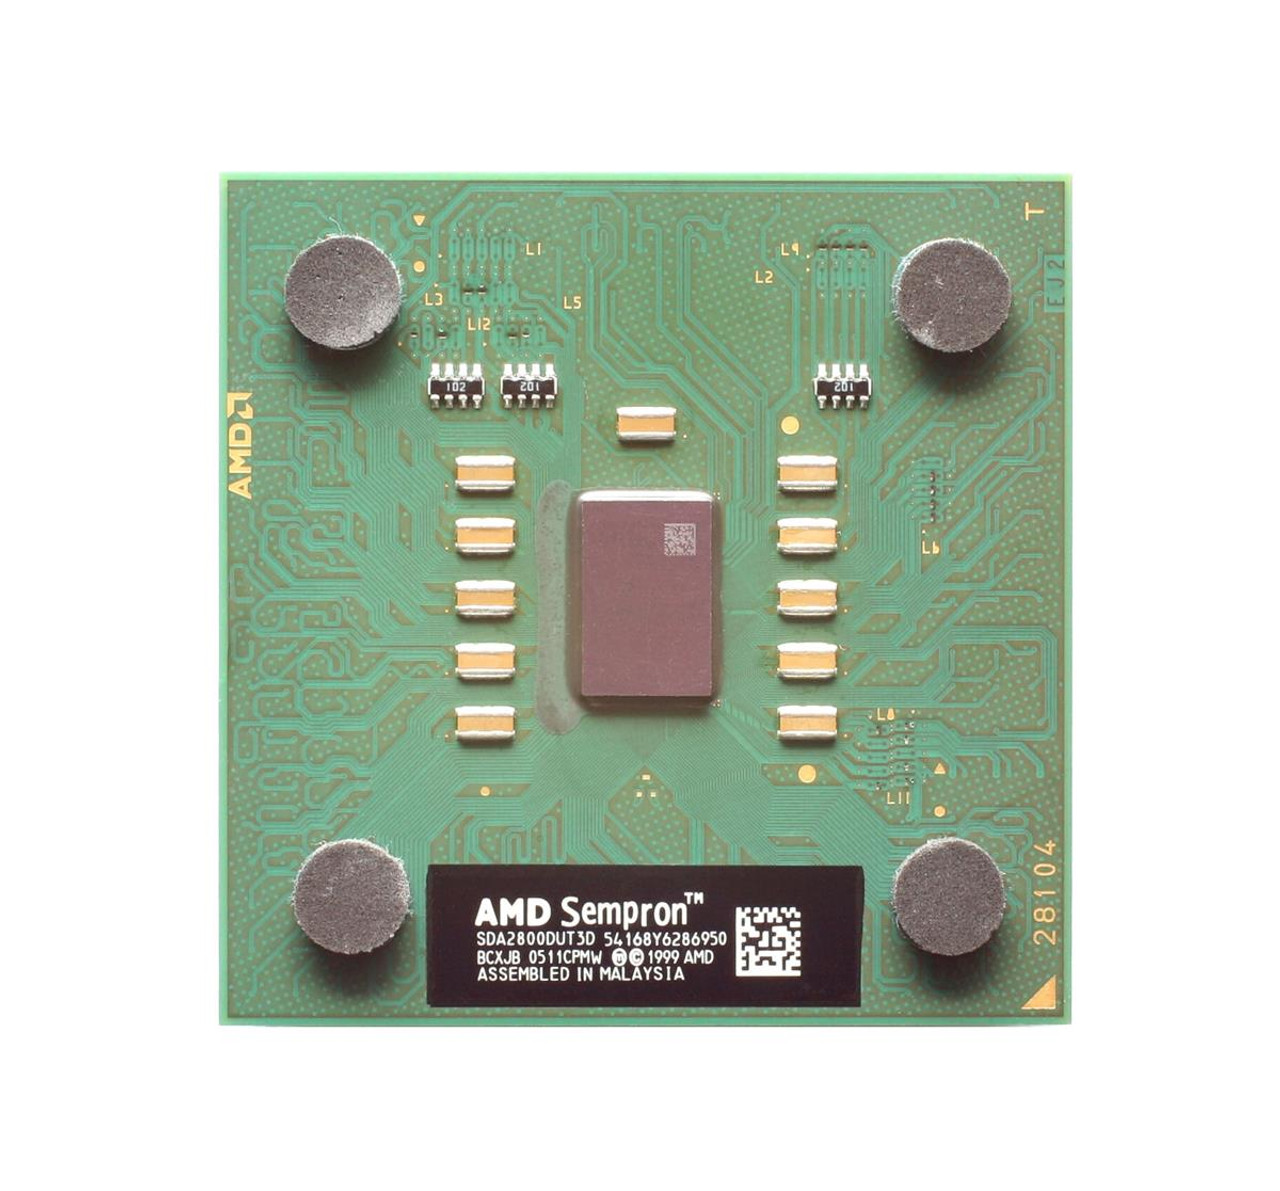 HP AMD Sempron LE-1300 2.3GHz Processor Upgrade 2.3GHz 1600MHz HT 512KB L2 Socket AM2 PGA-940 Mfr P/N GY780AV